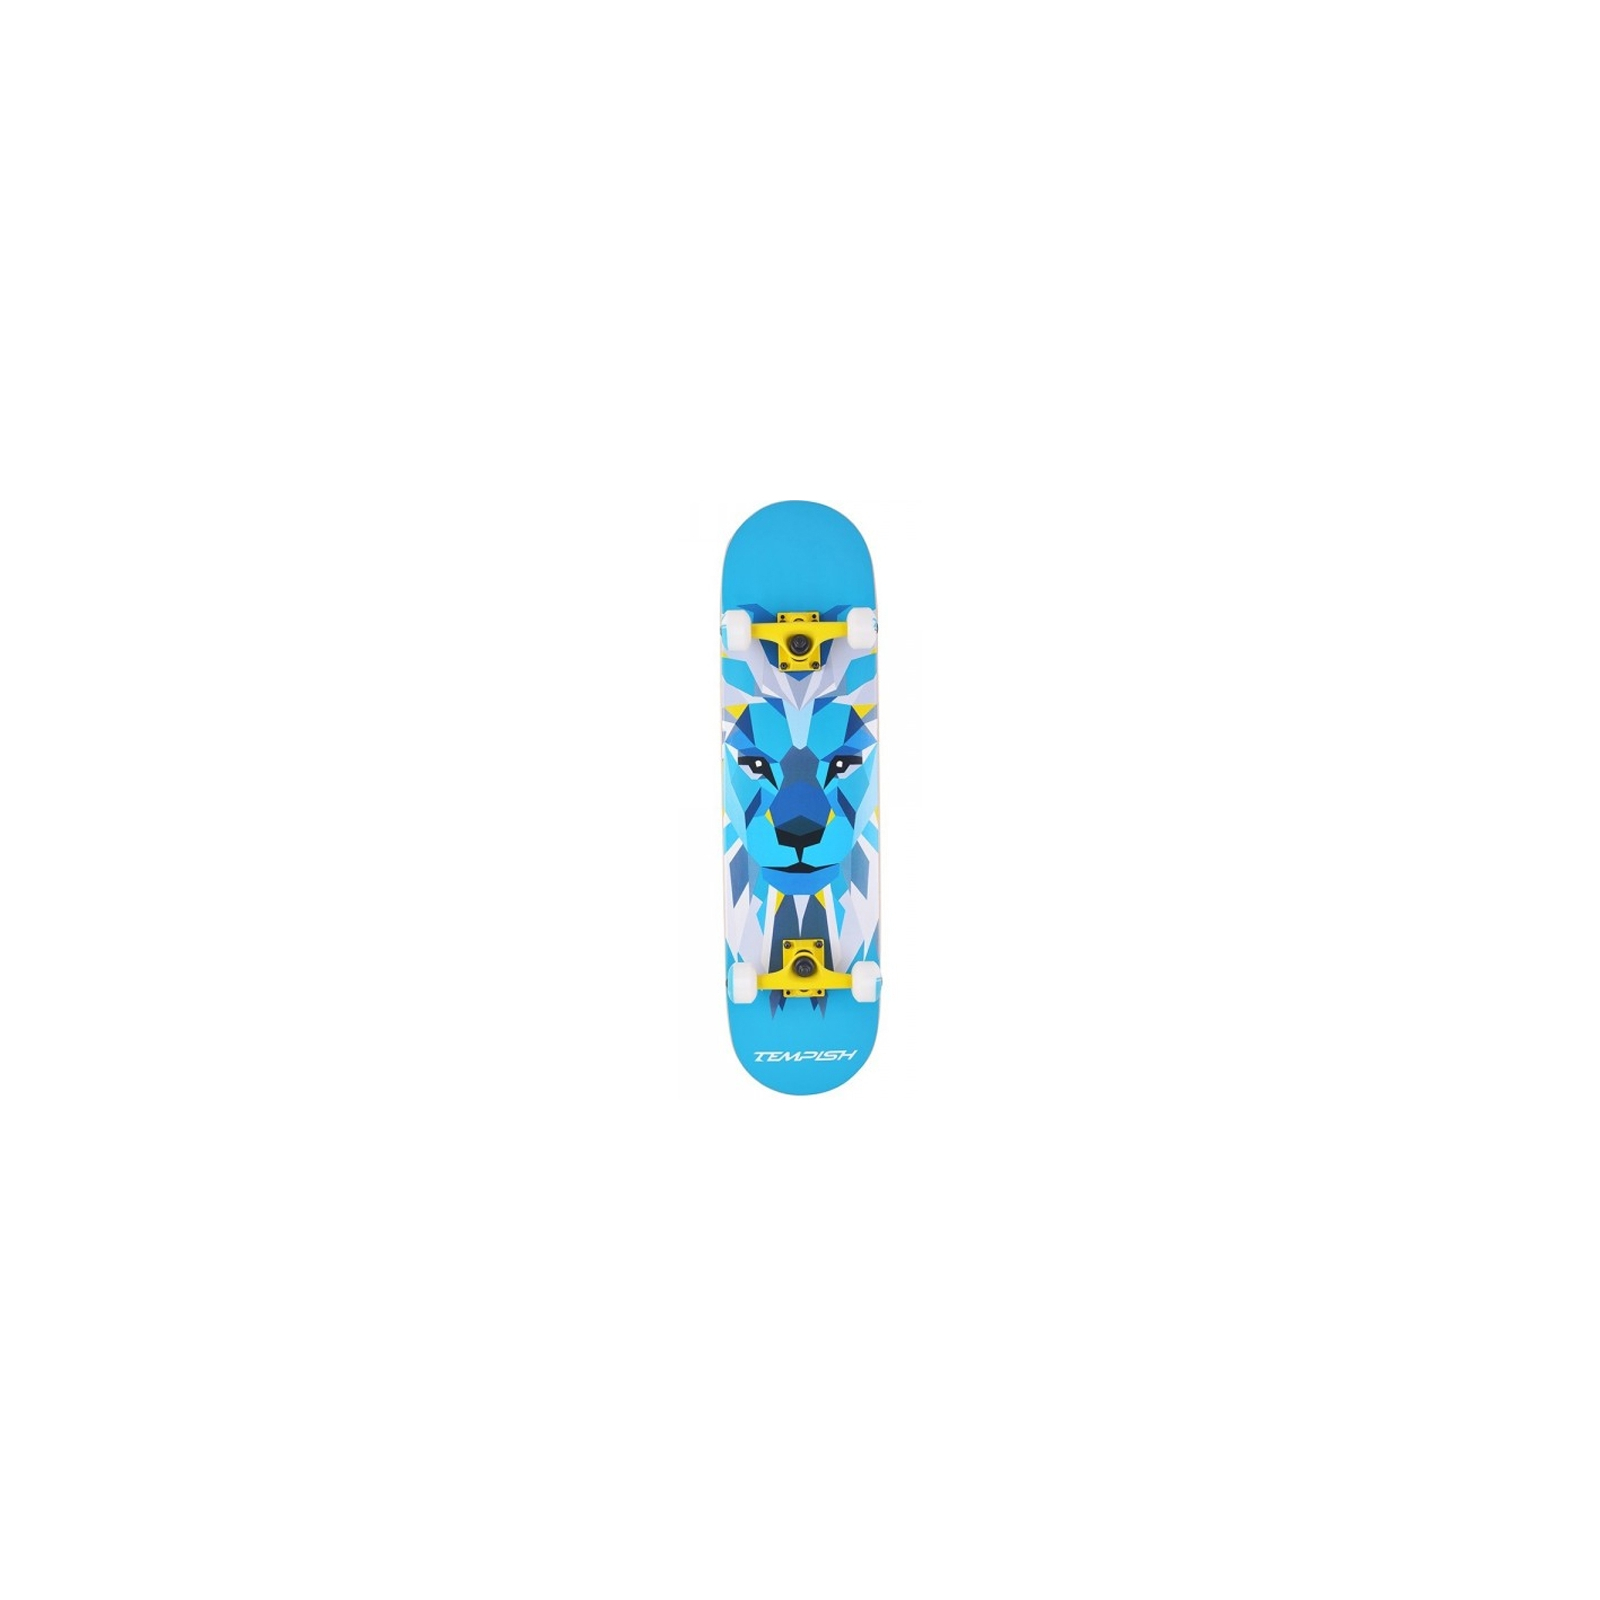 Скейтборд Tempish Lion/Blue (106000043/Blue)